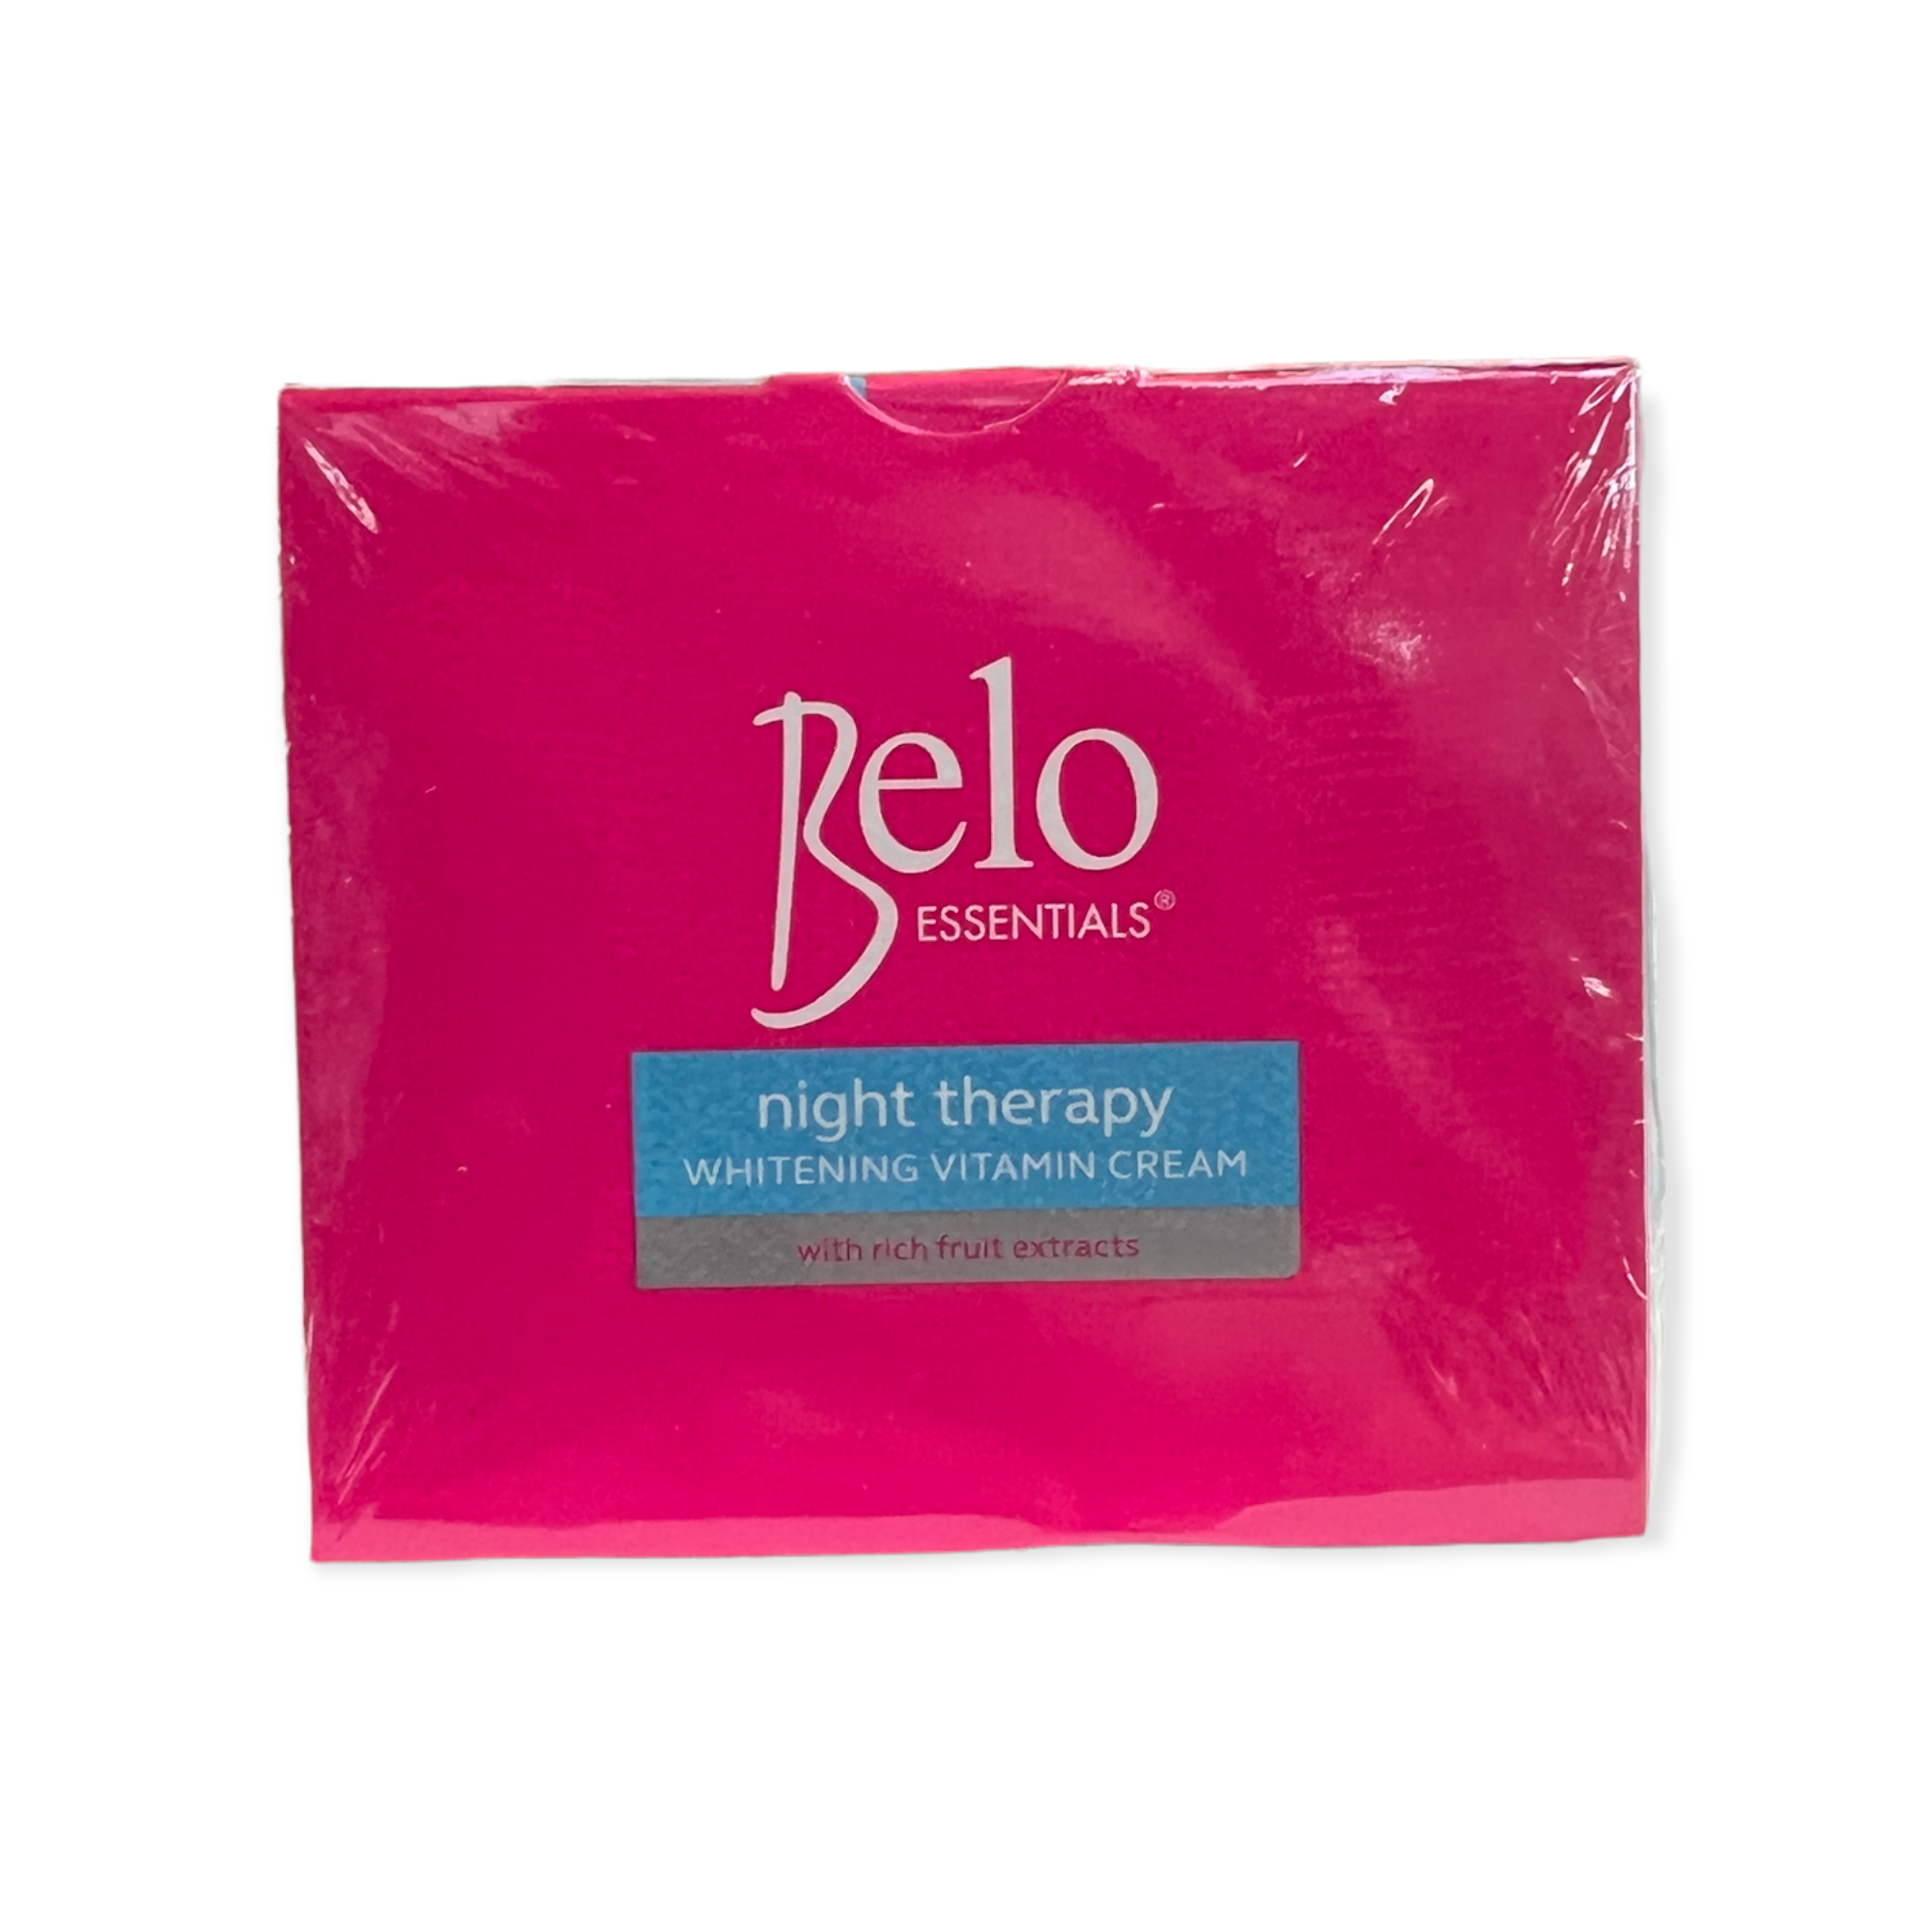 Belo Essentinals - Night Therapy Vitamin Cream - 50 G